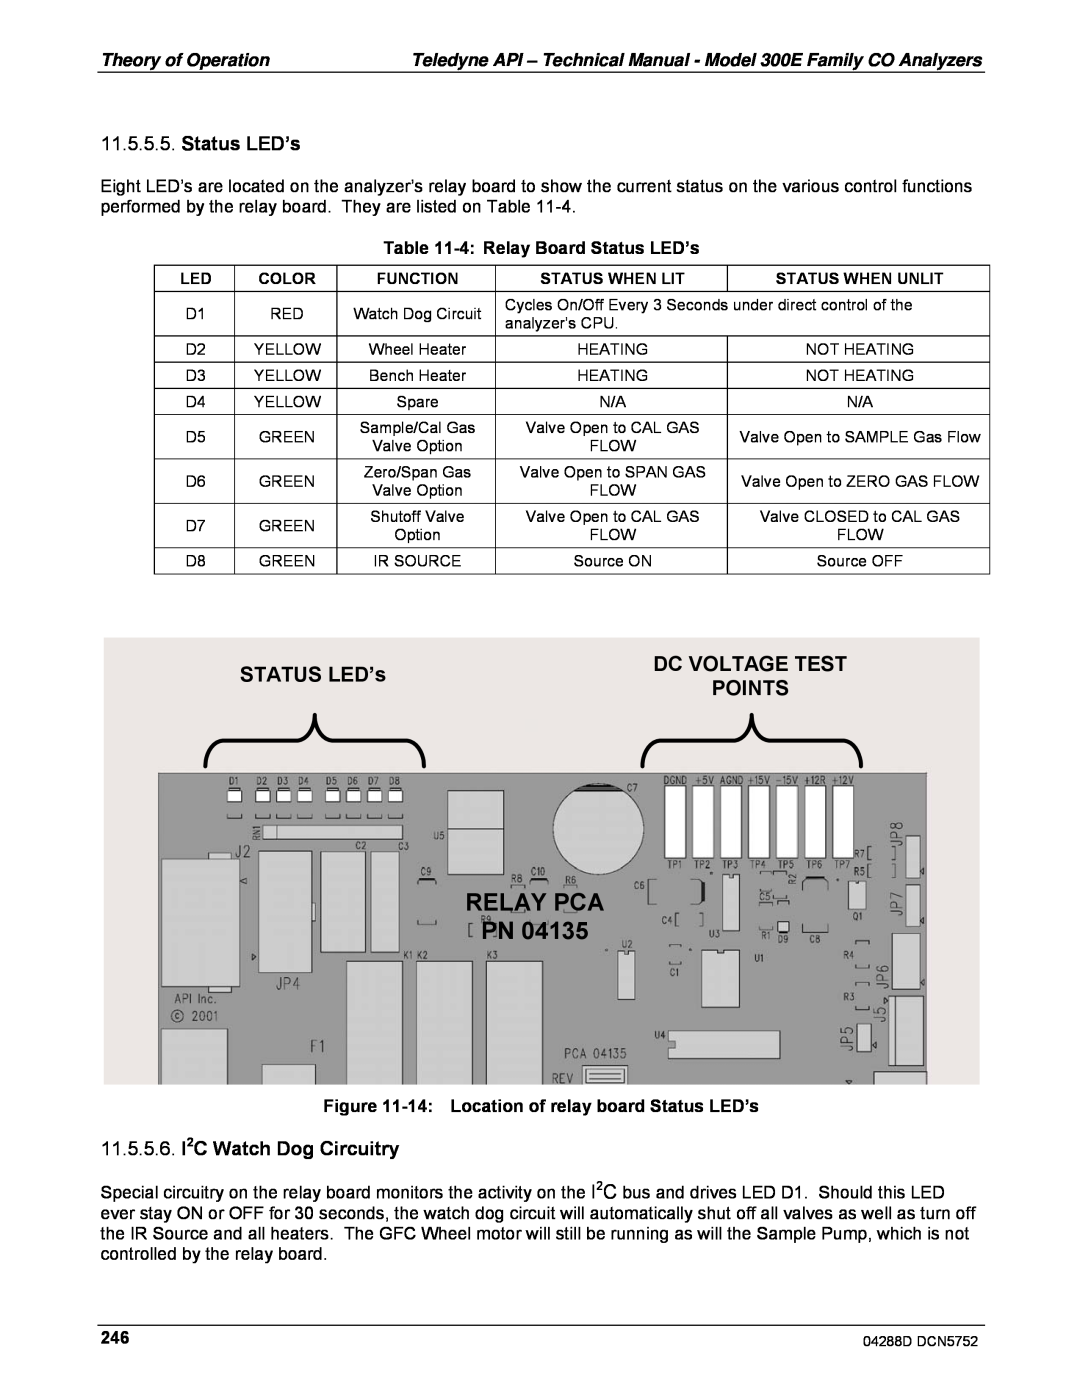 Teledyne M300EM Relay Pca Pn, STATUS LED’s, Status LED’s, Dc Voltage Test, Points, 11.5.5.6.I2C Watch Dog Circuitry 